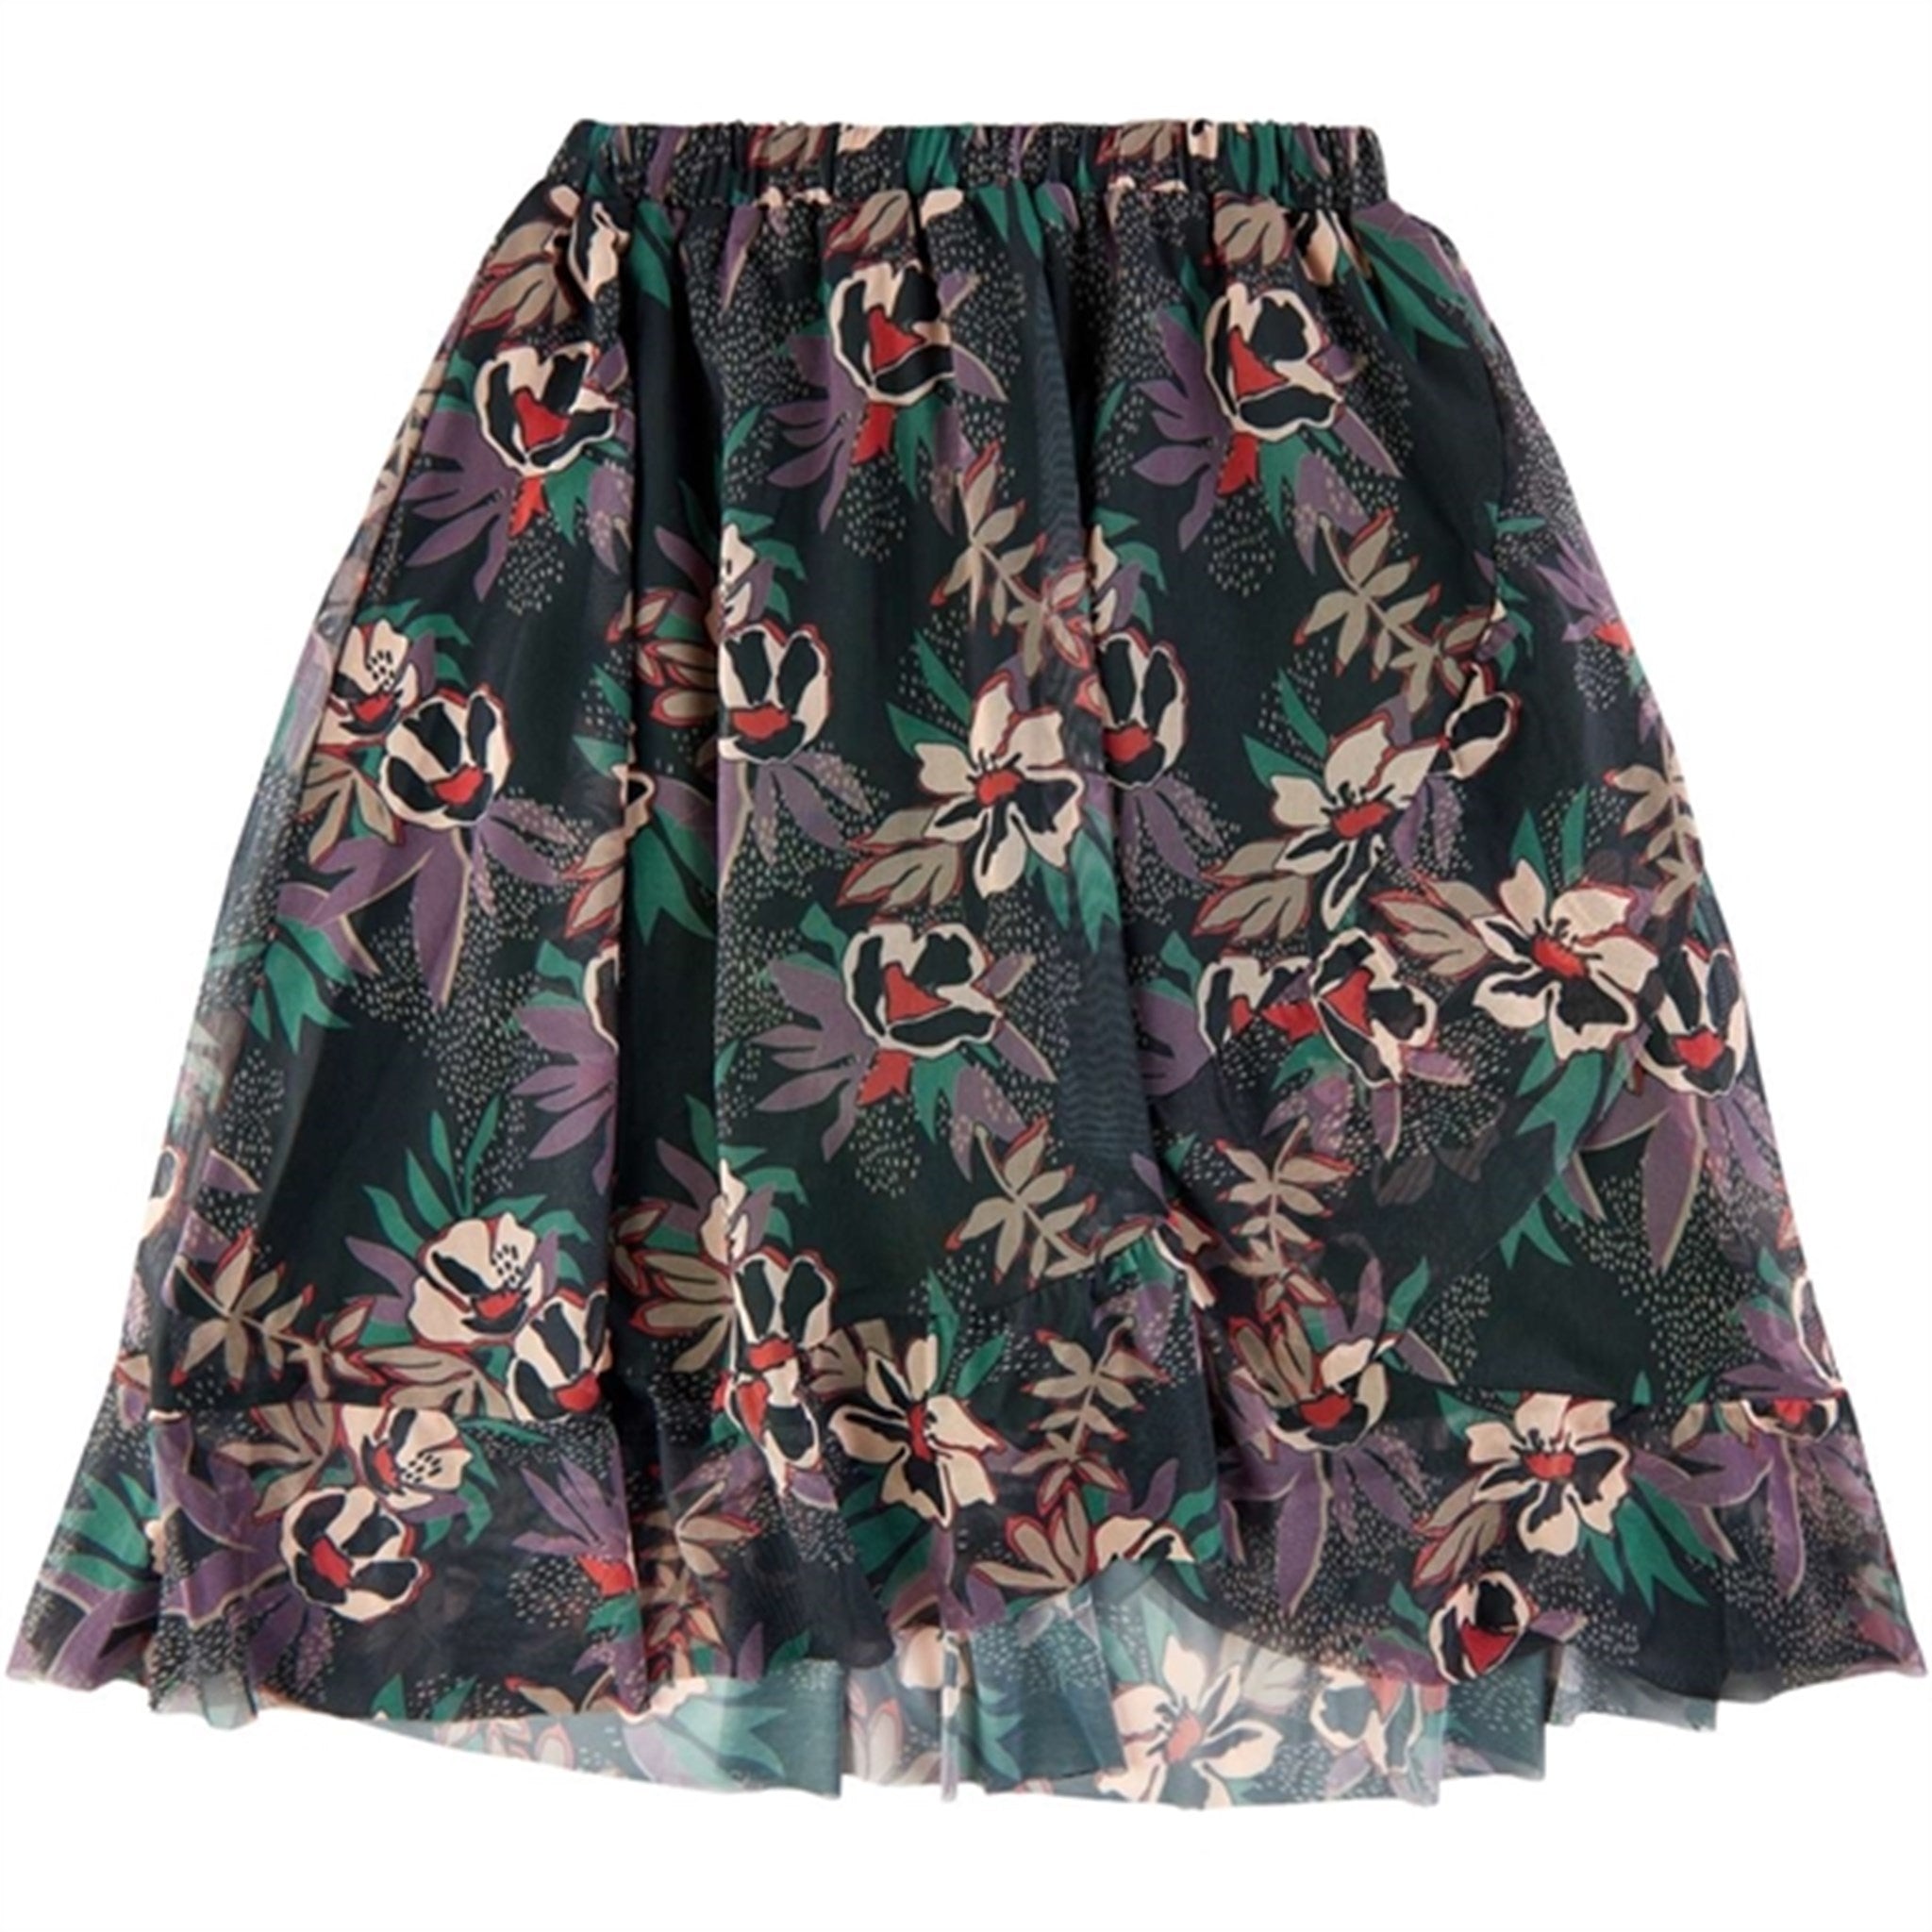 The New Aop Floral Enna Skirt